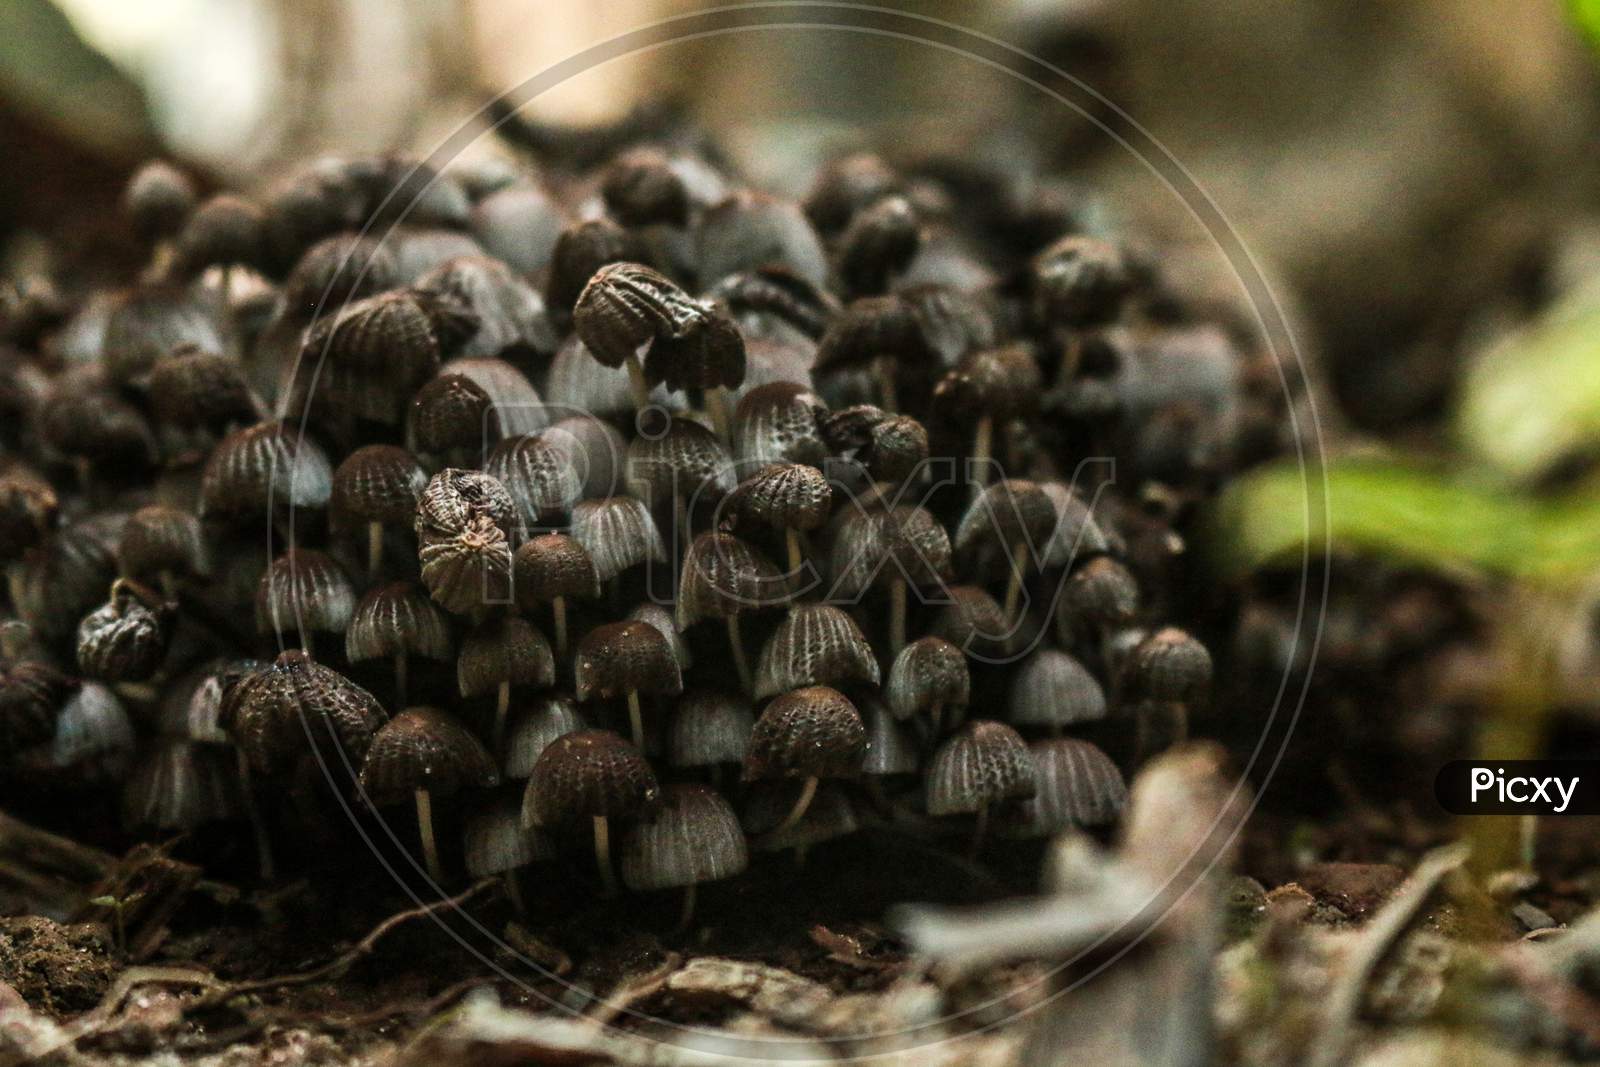 Beautiful mushroom images with little tree macro photography